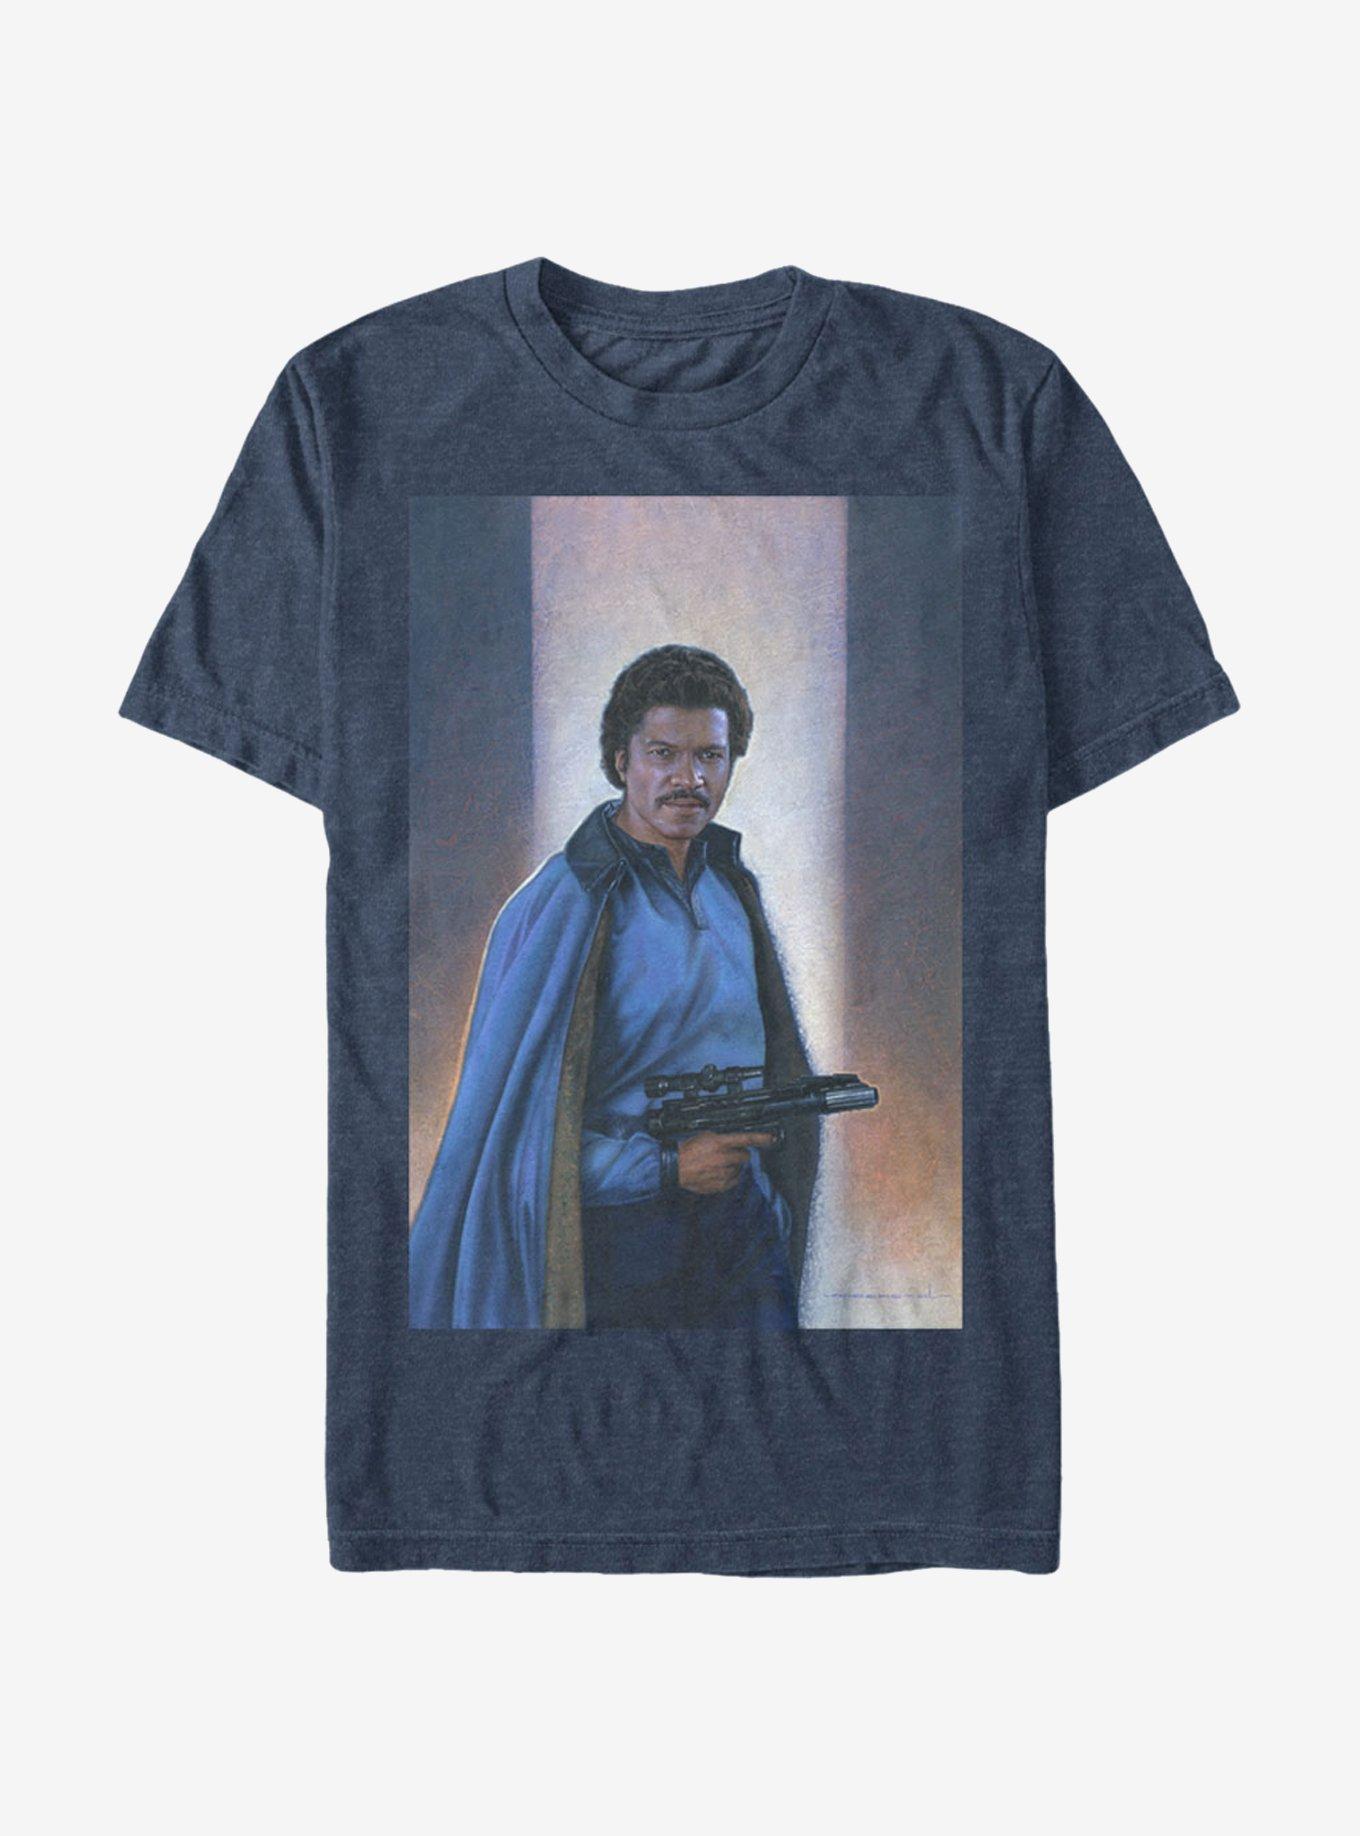 Star Wars Lando Pose T-Shirt, NAVY HTR, hi-res